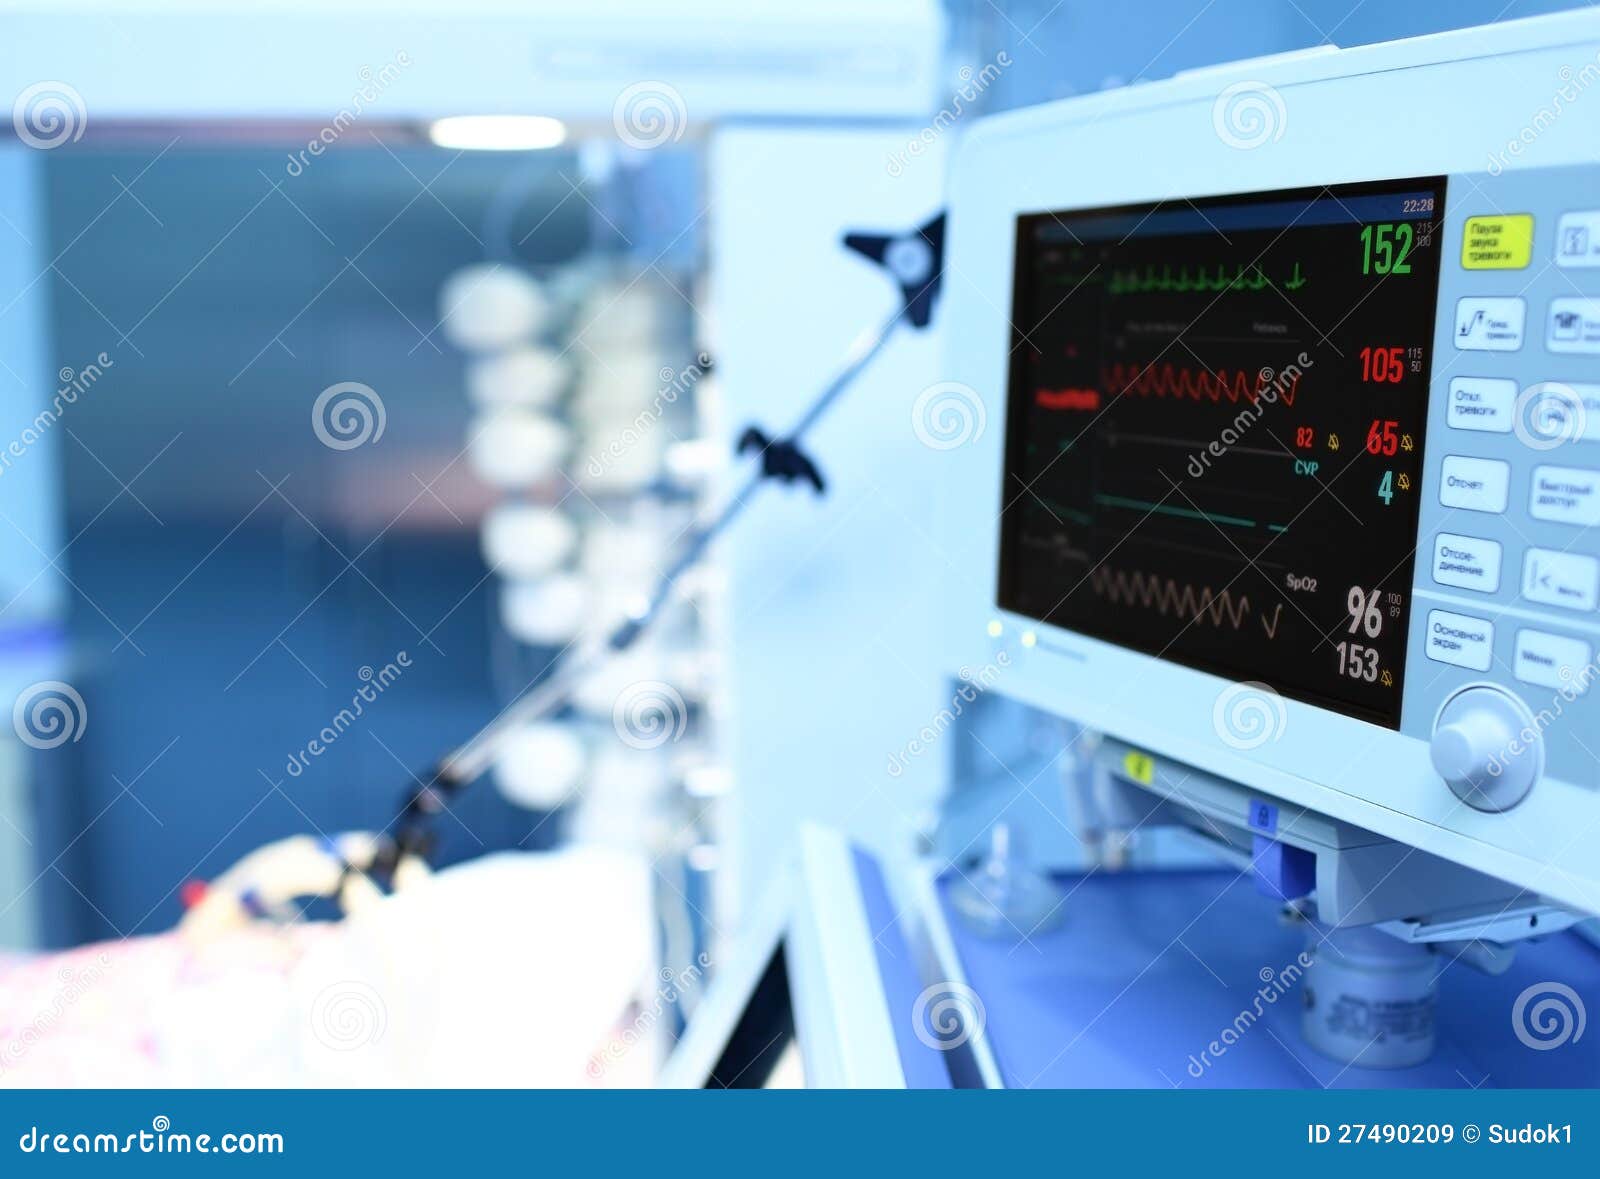 modern medical monitor with ecg